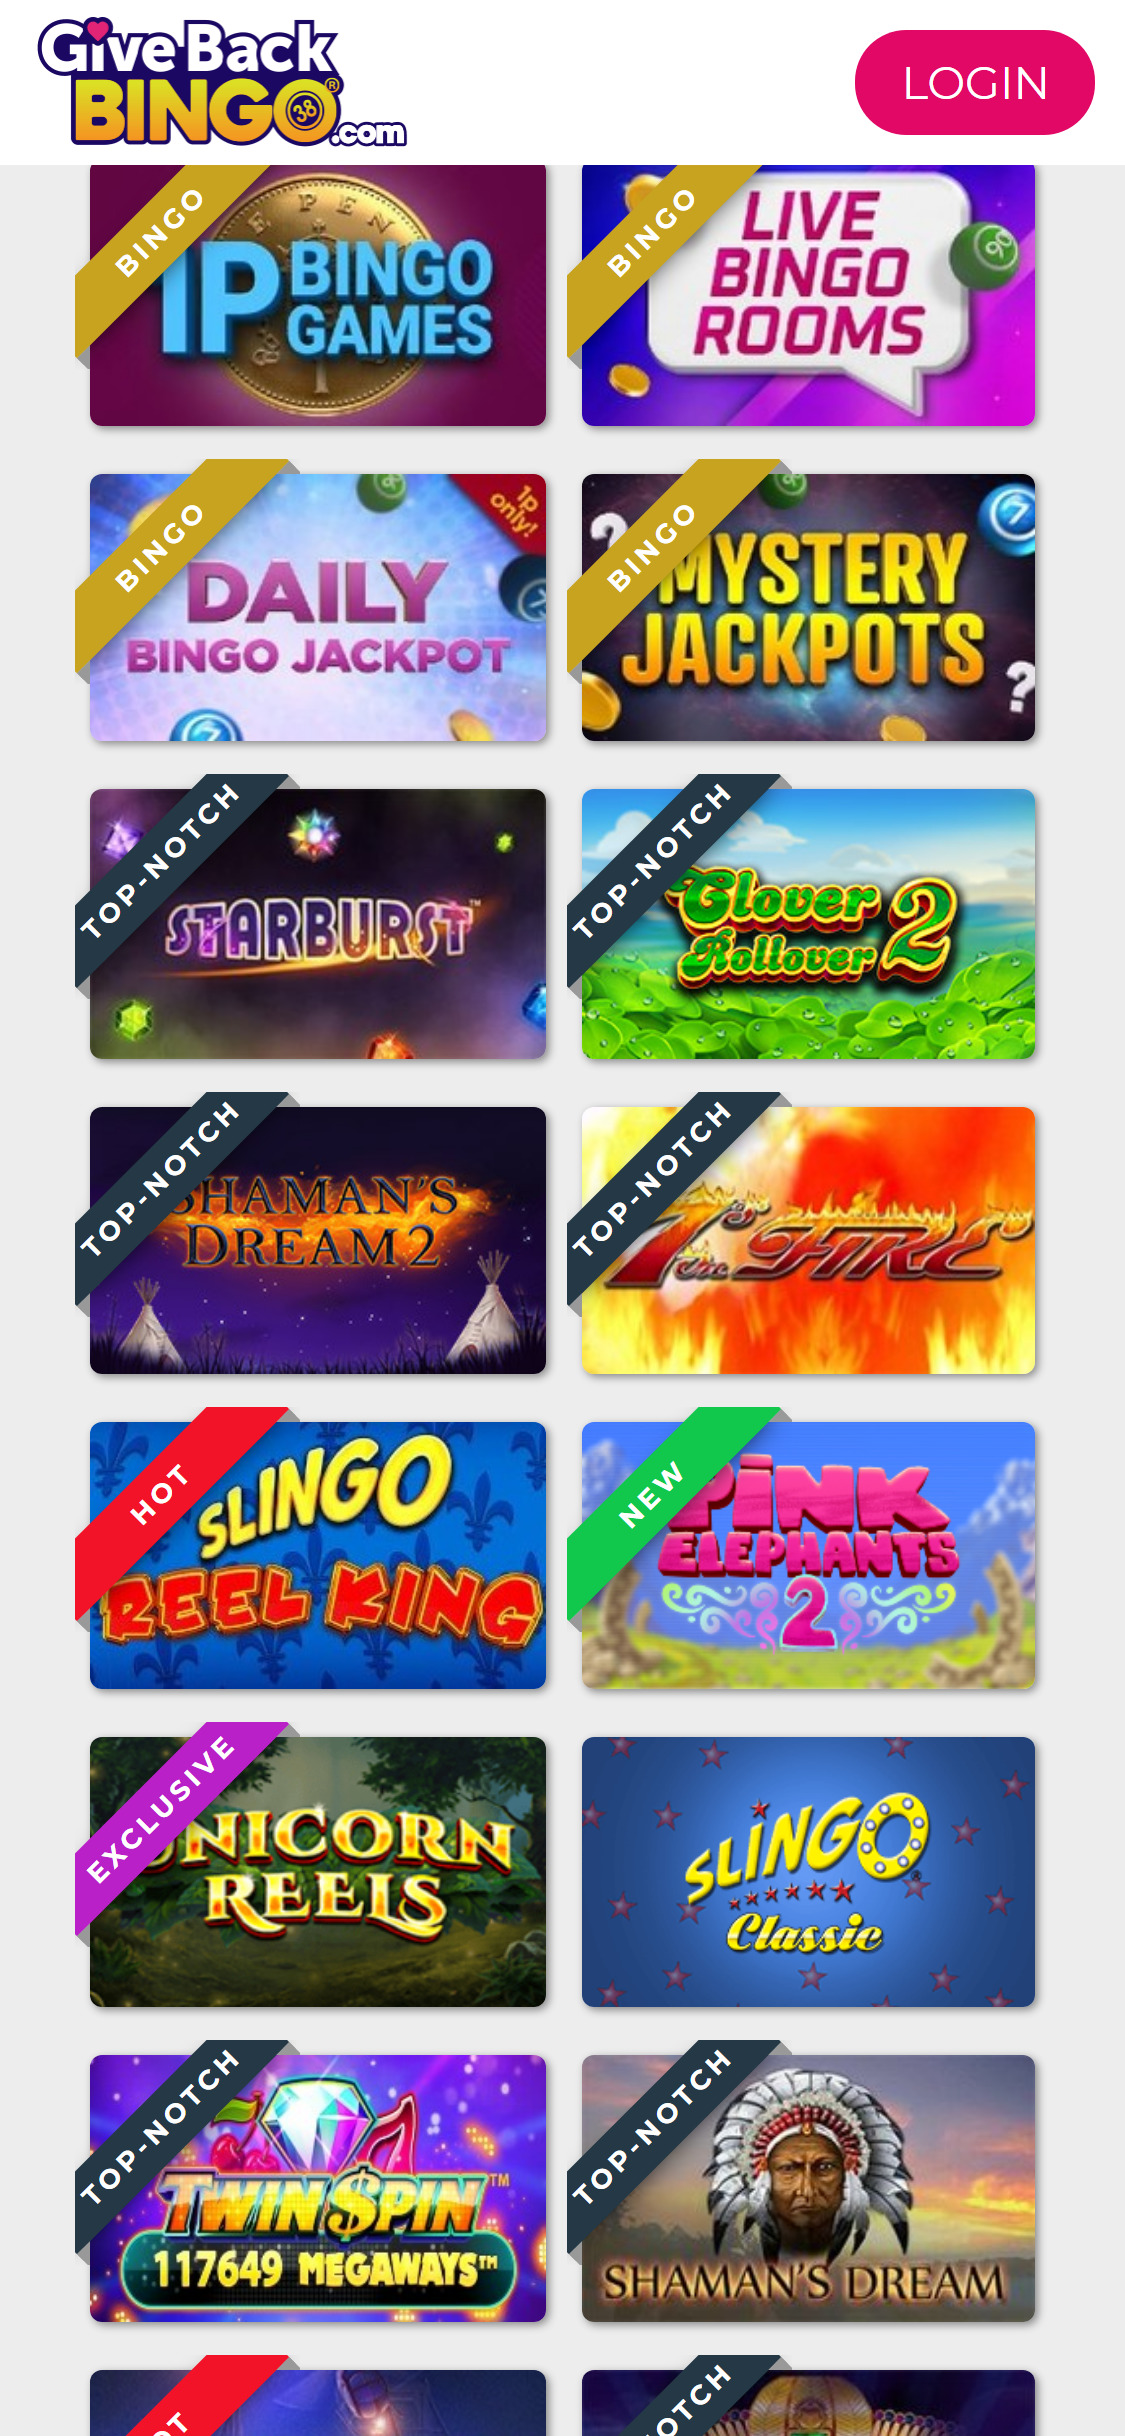 Giveback Bingo Casino Mobile Games Review